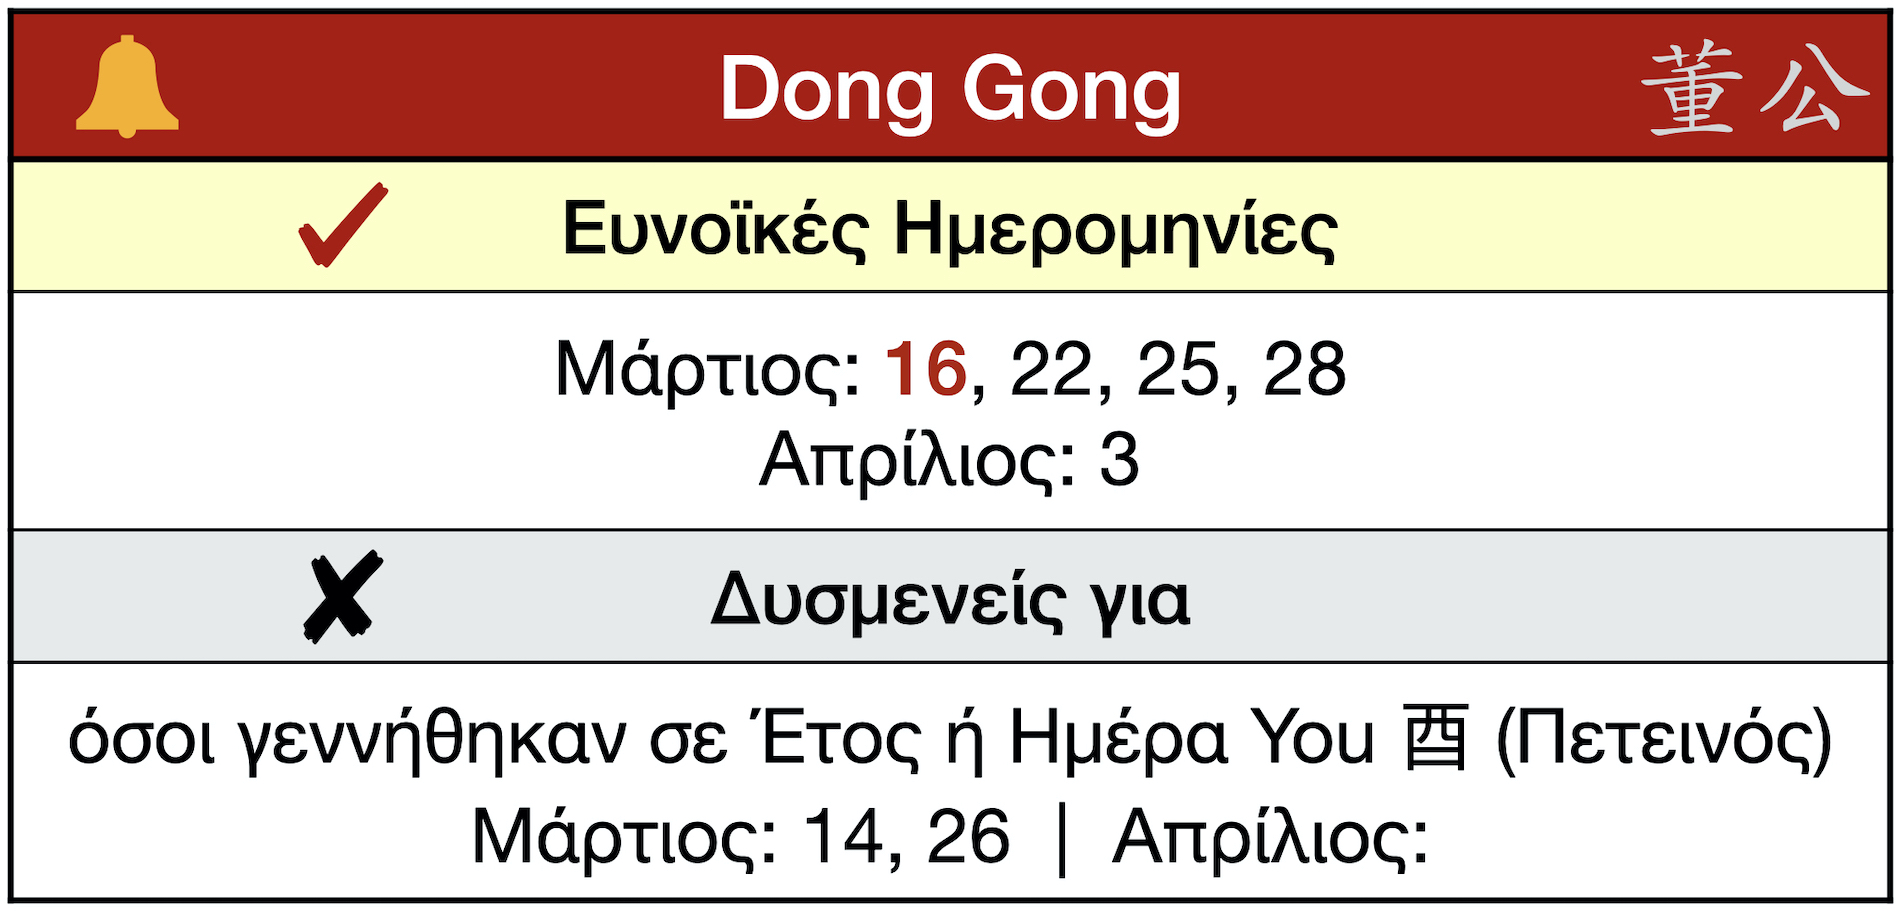 Dong Gong Qi Activating